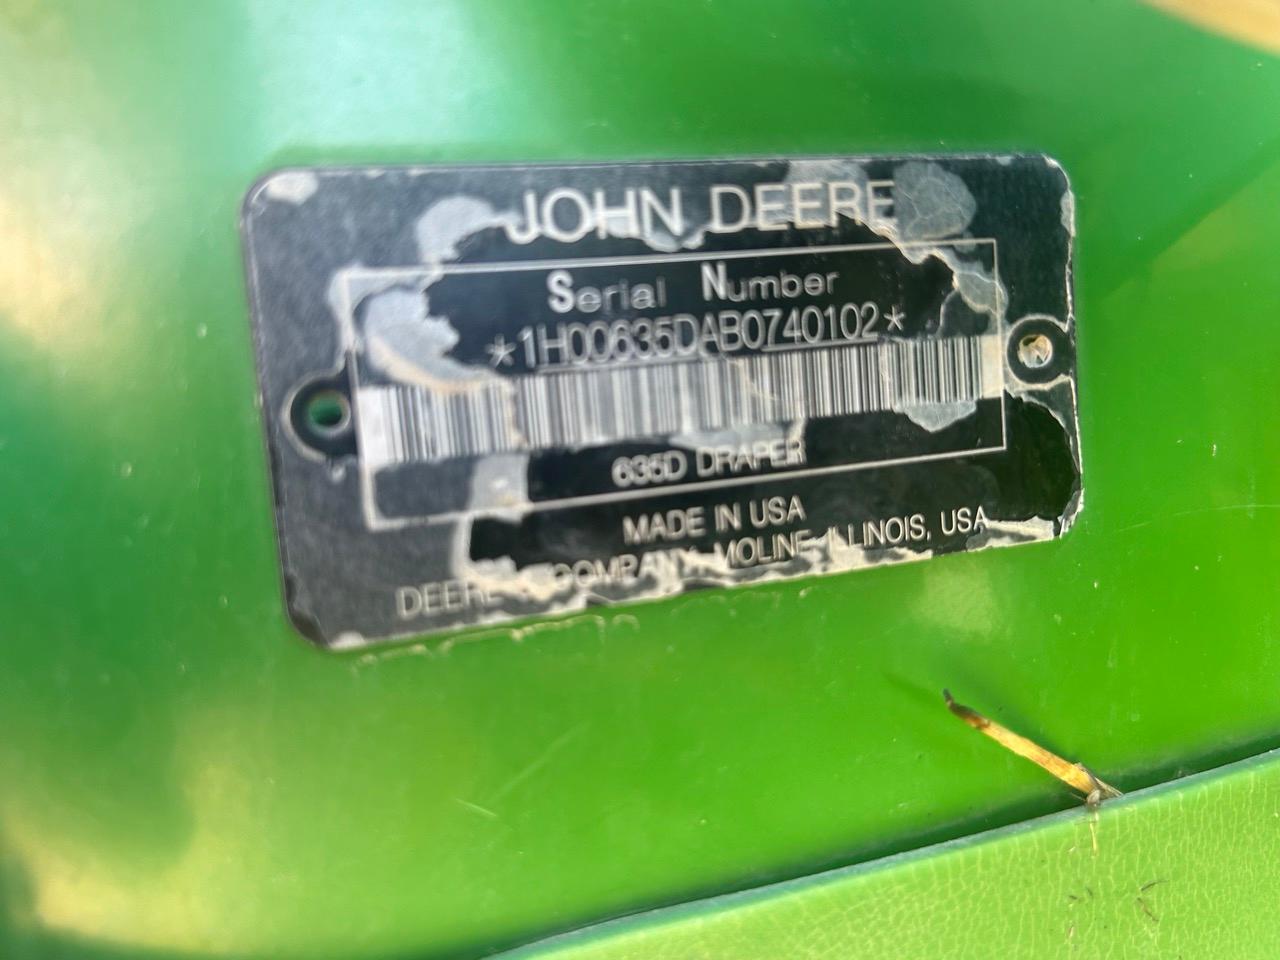 John Deere 635D